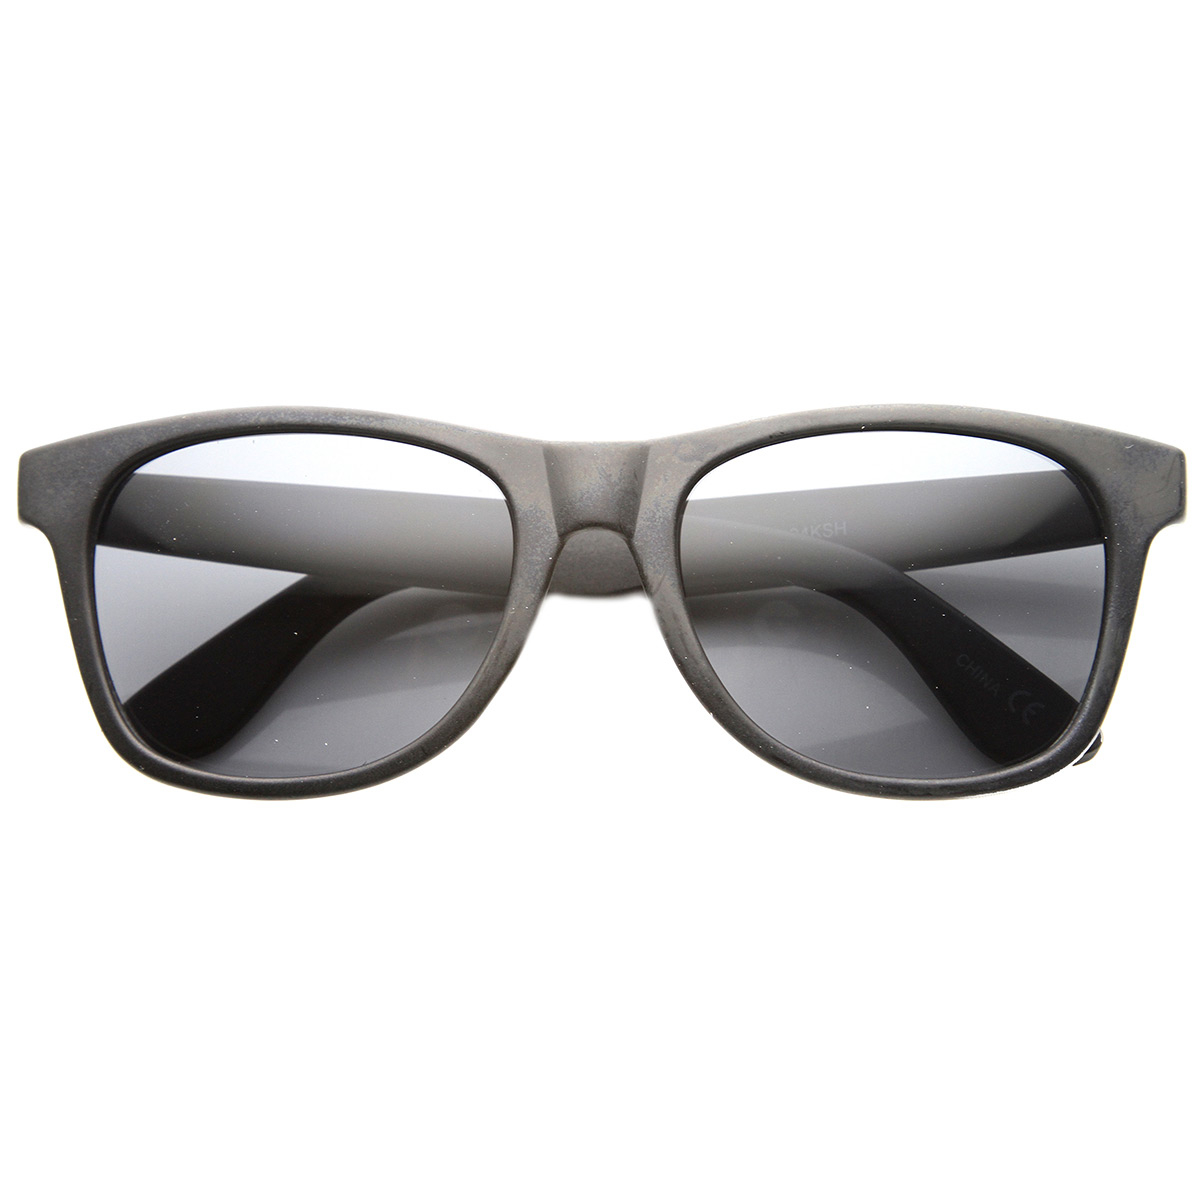 Mens Retro Classic Clean Plastic Horned Rimmed Sunglasses 9654 - Shiny-Black Smoke